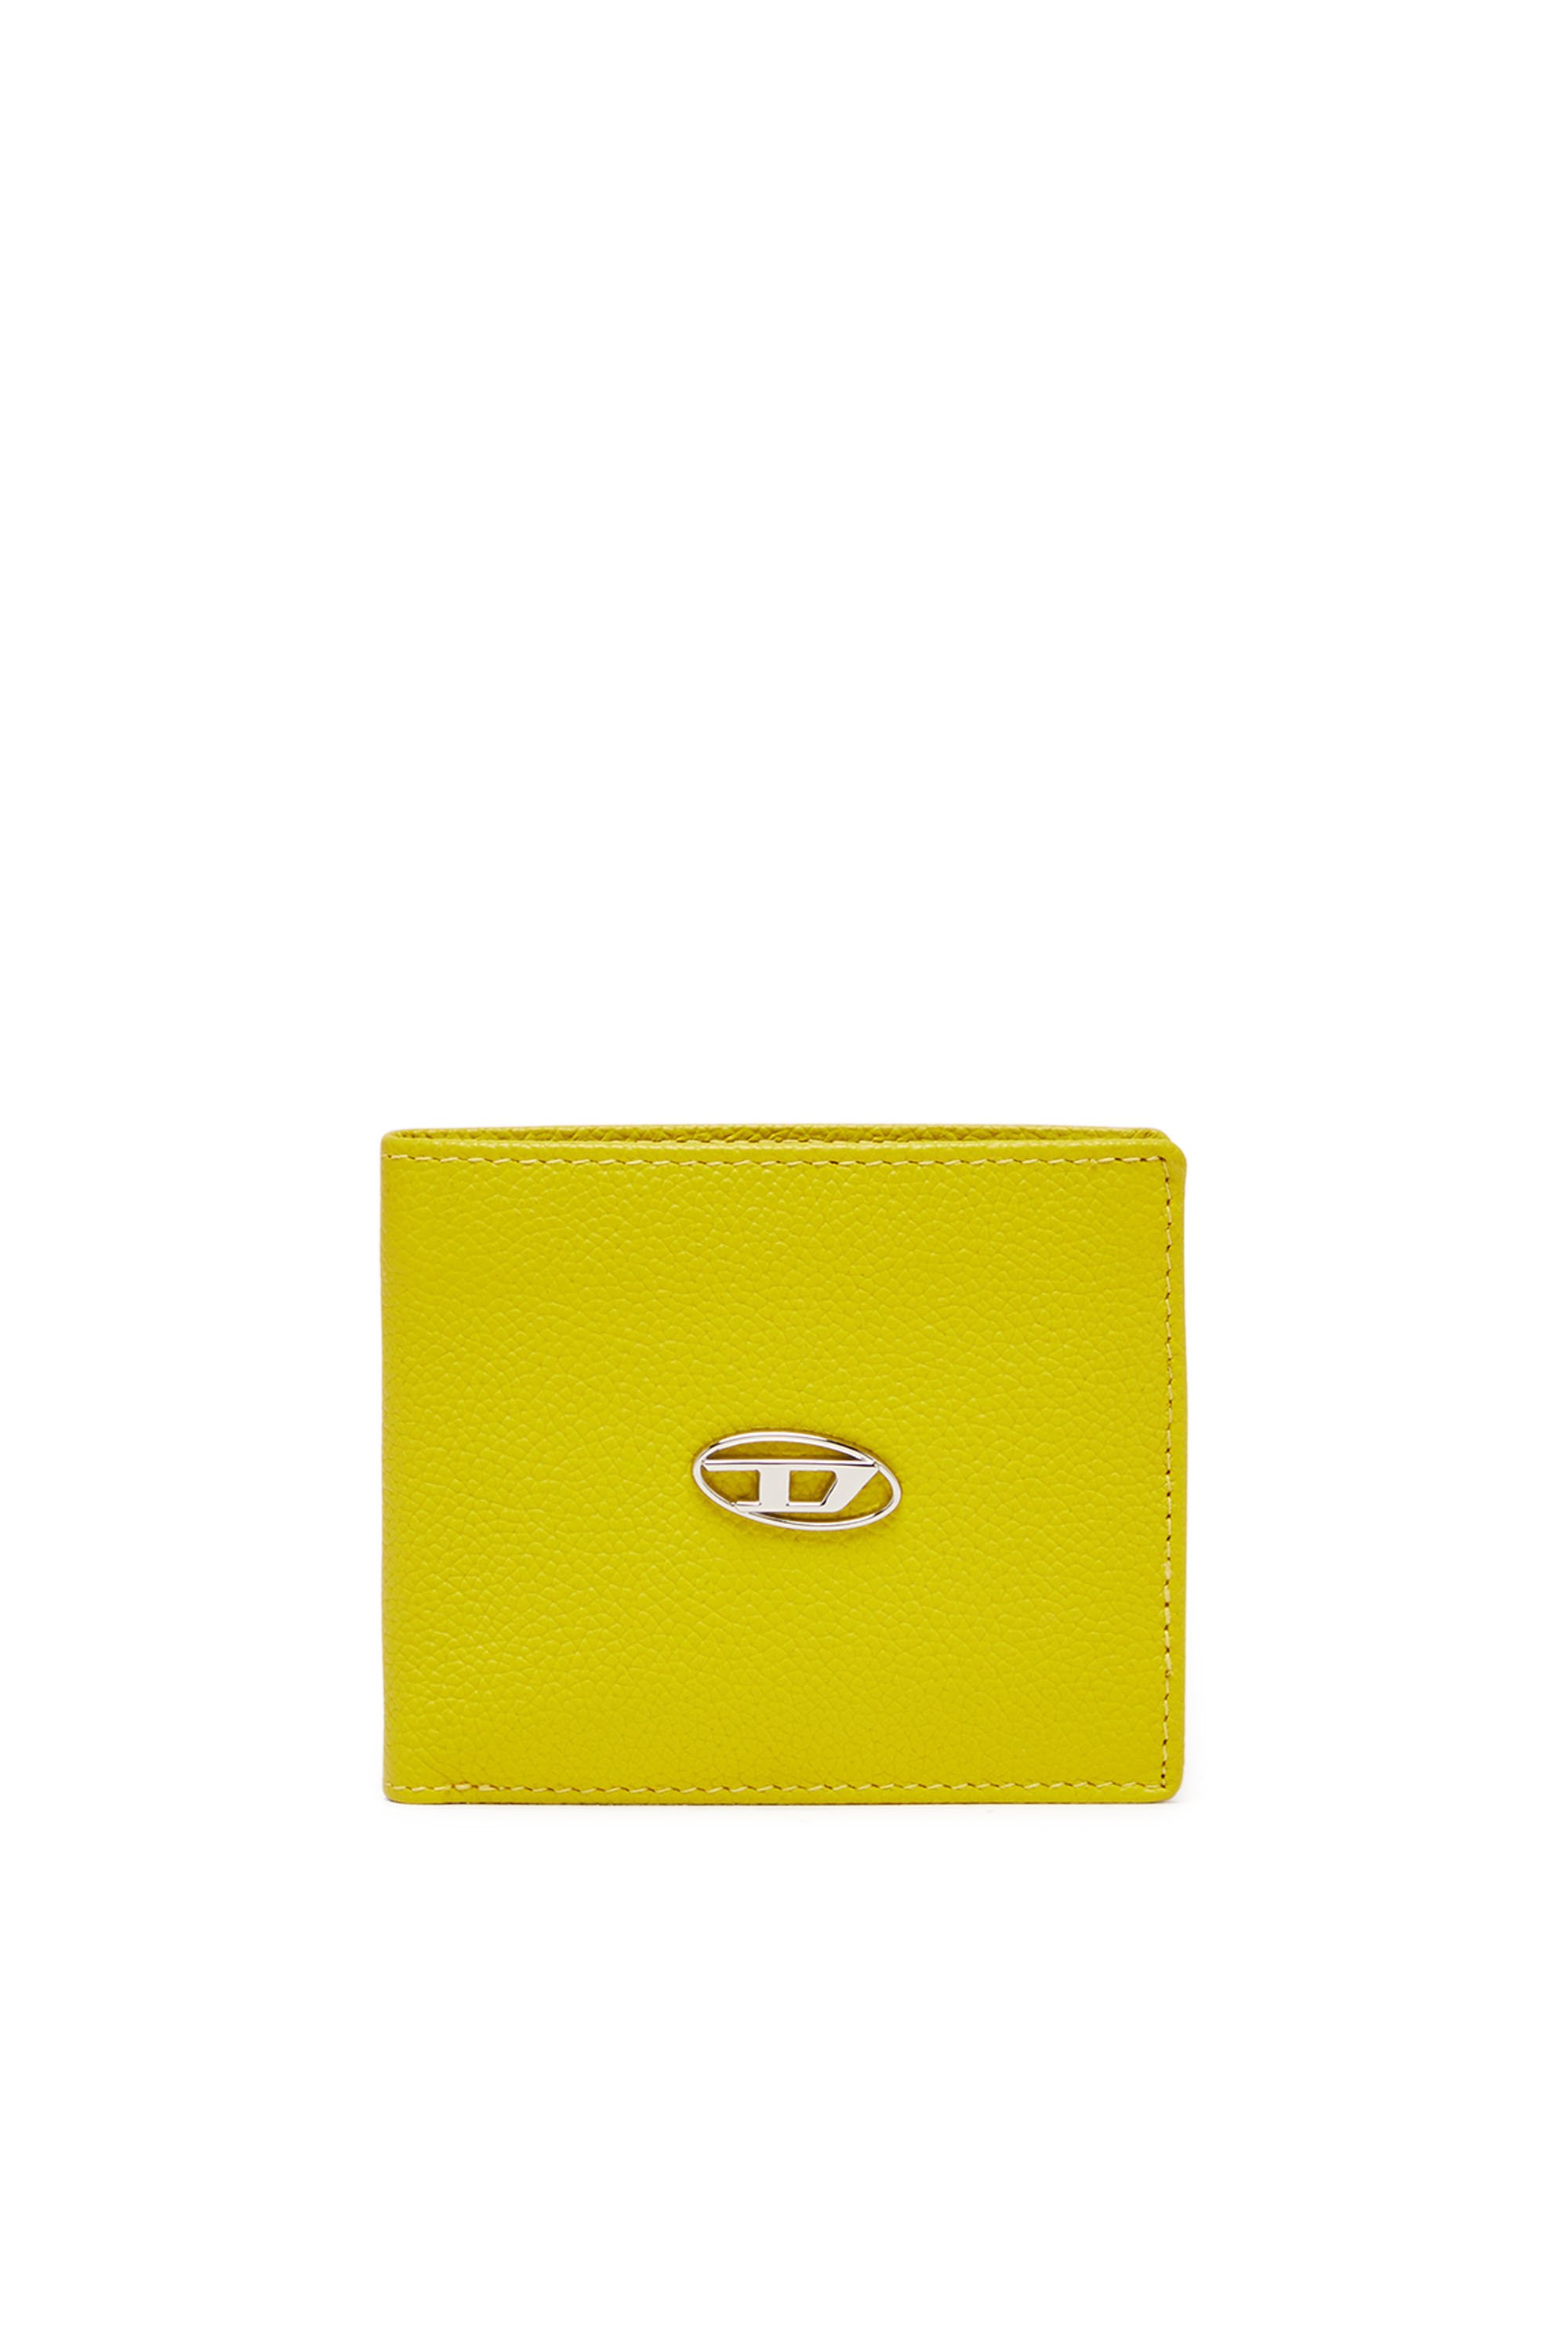 Diesel - BI FOLD COIN S, Man Bi-fold wallet in grainy leather in Yellow - Image 1